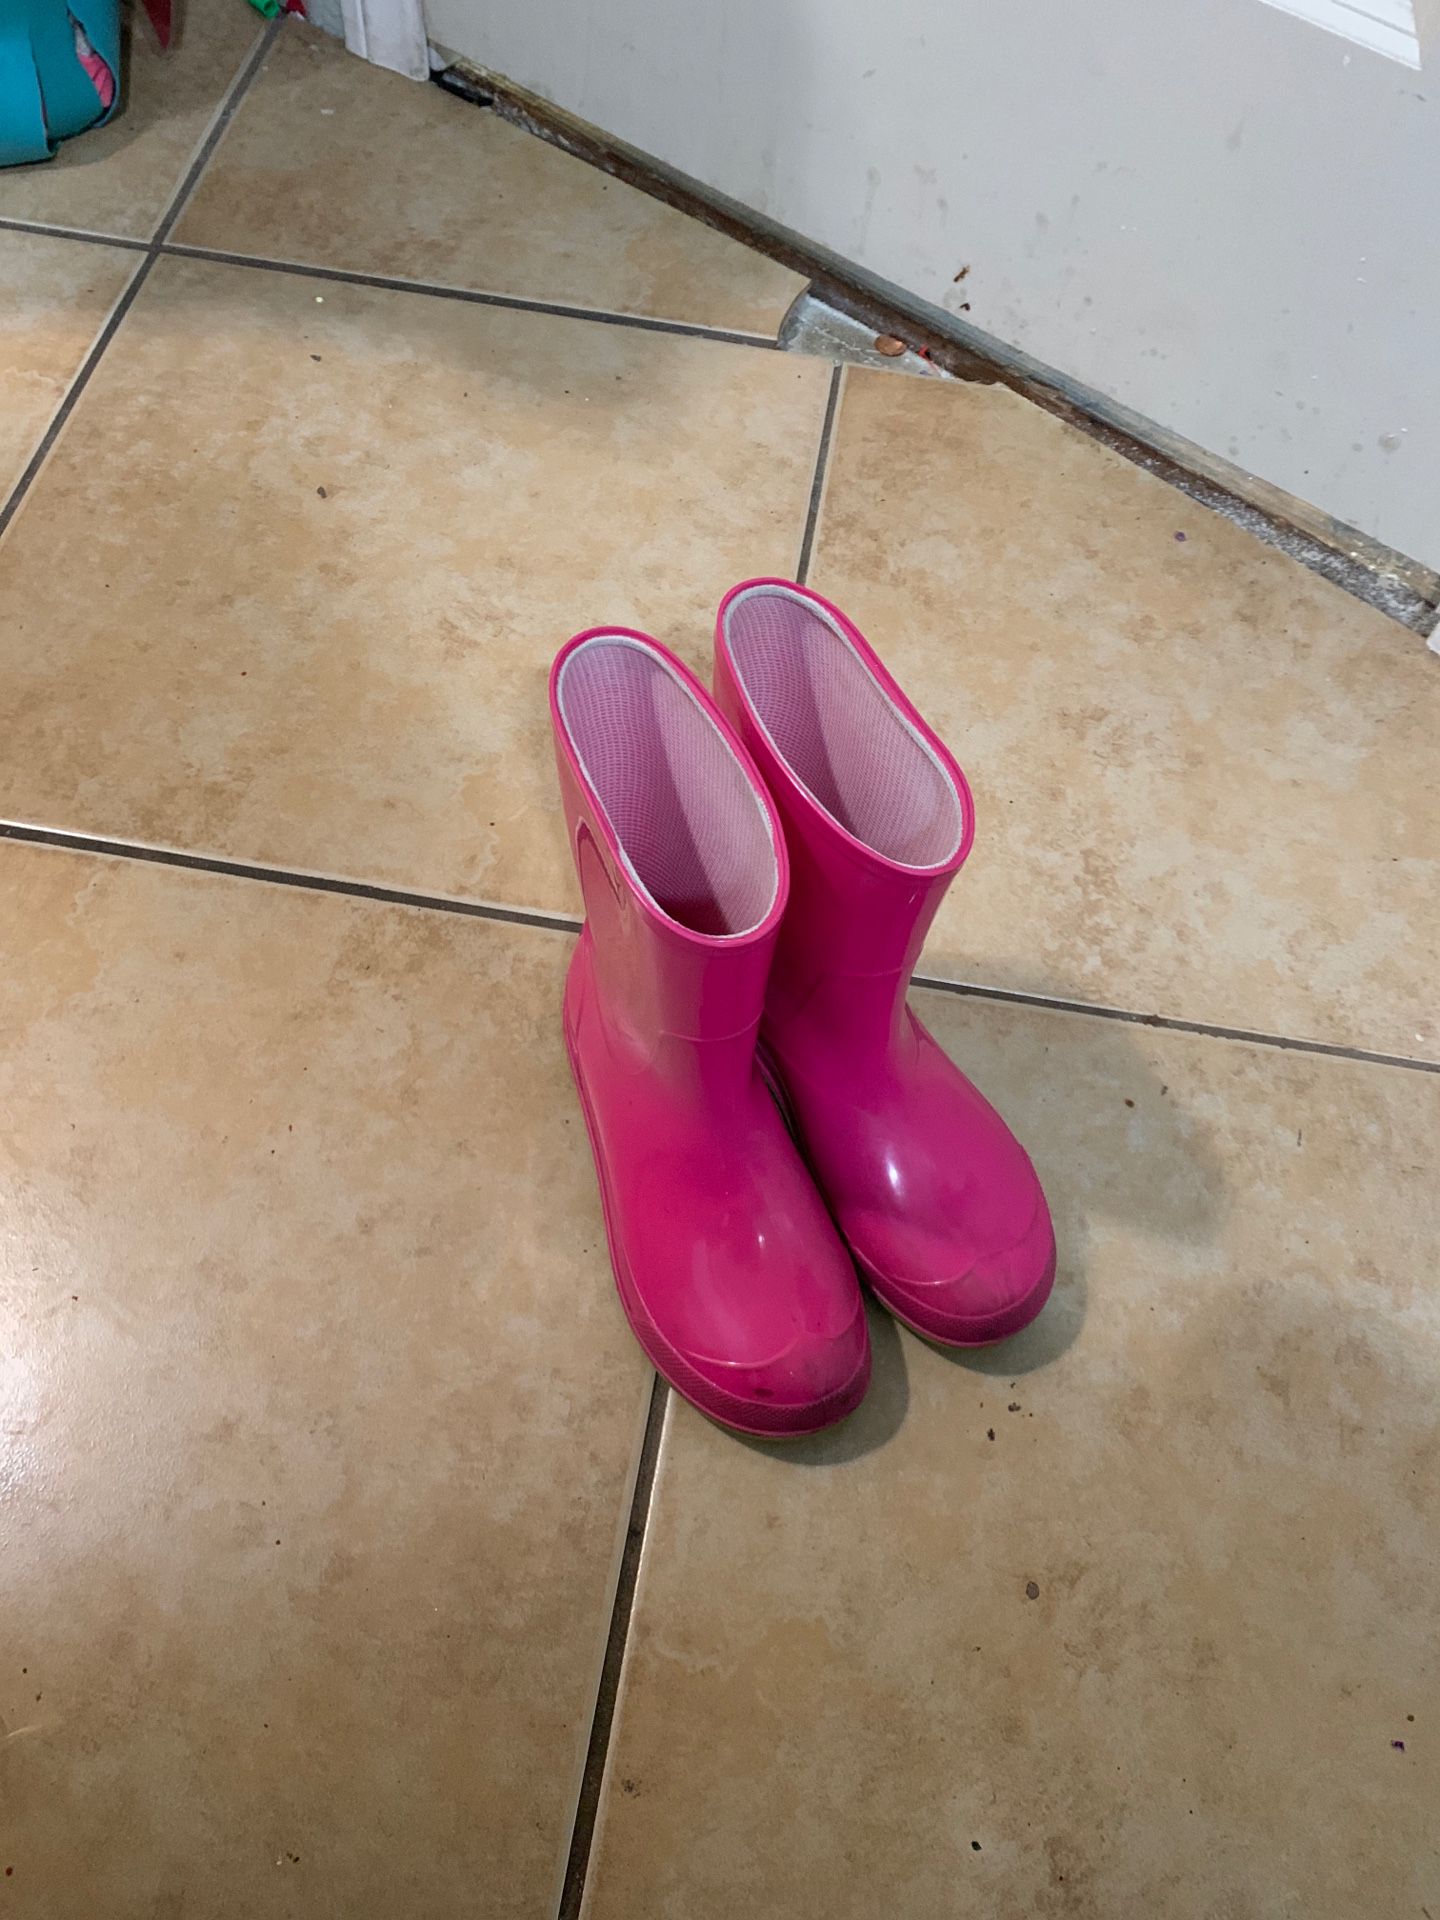 Girls pink rain boots